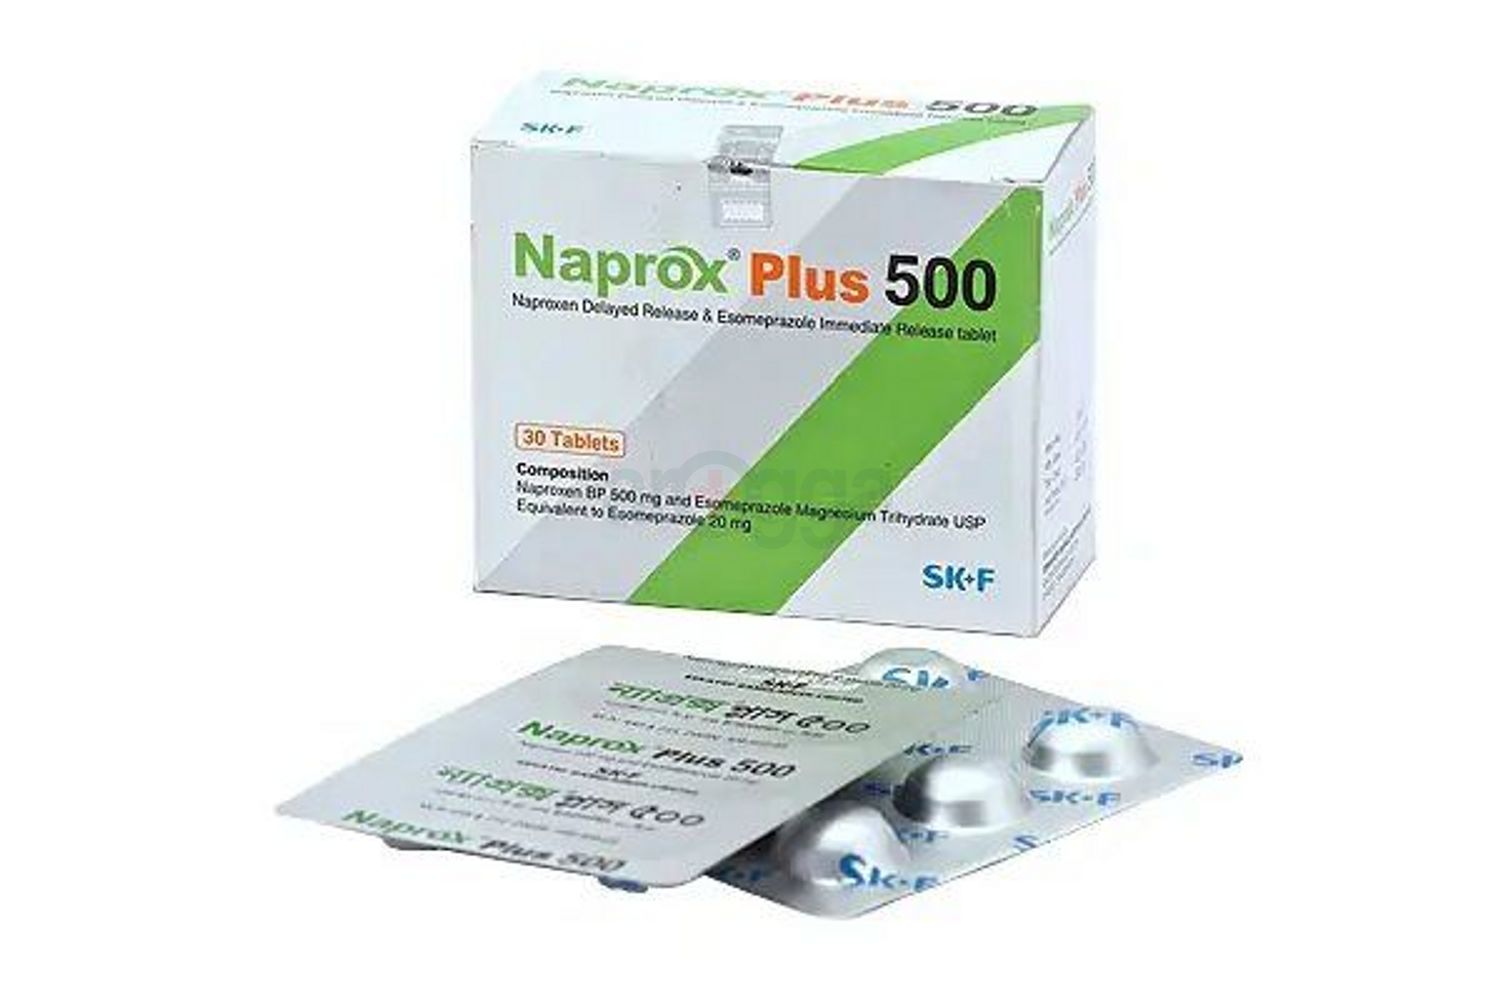 Naprox Plus 500